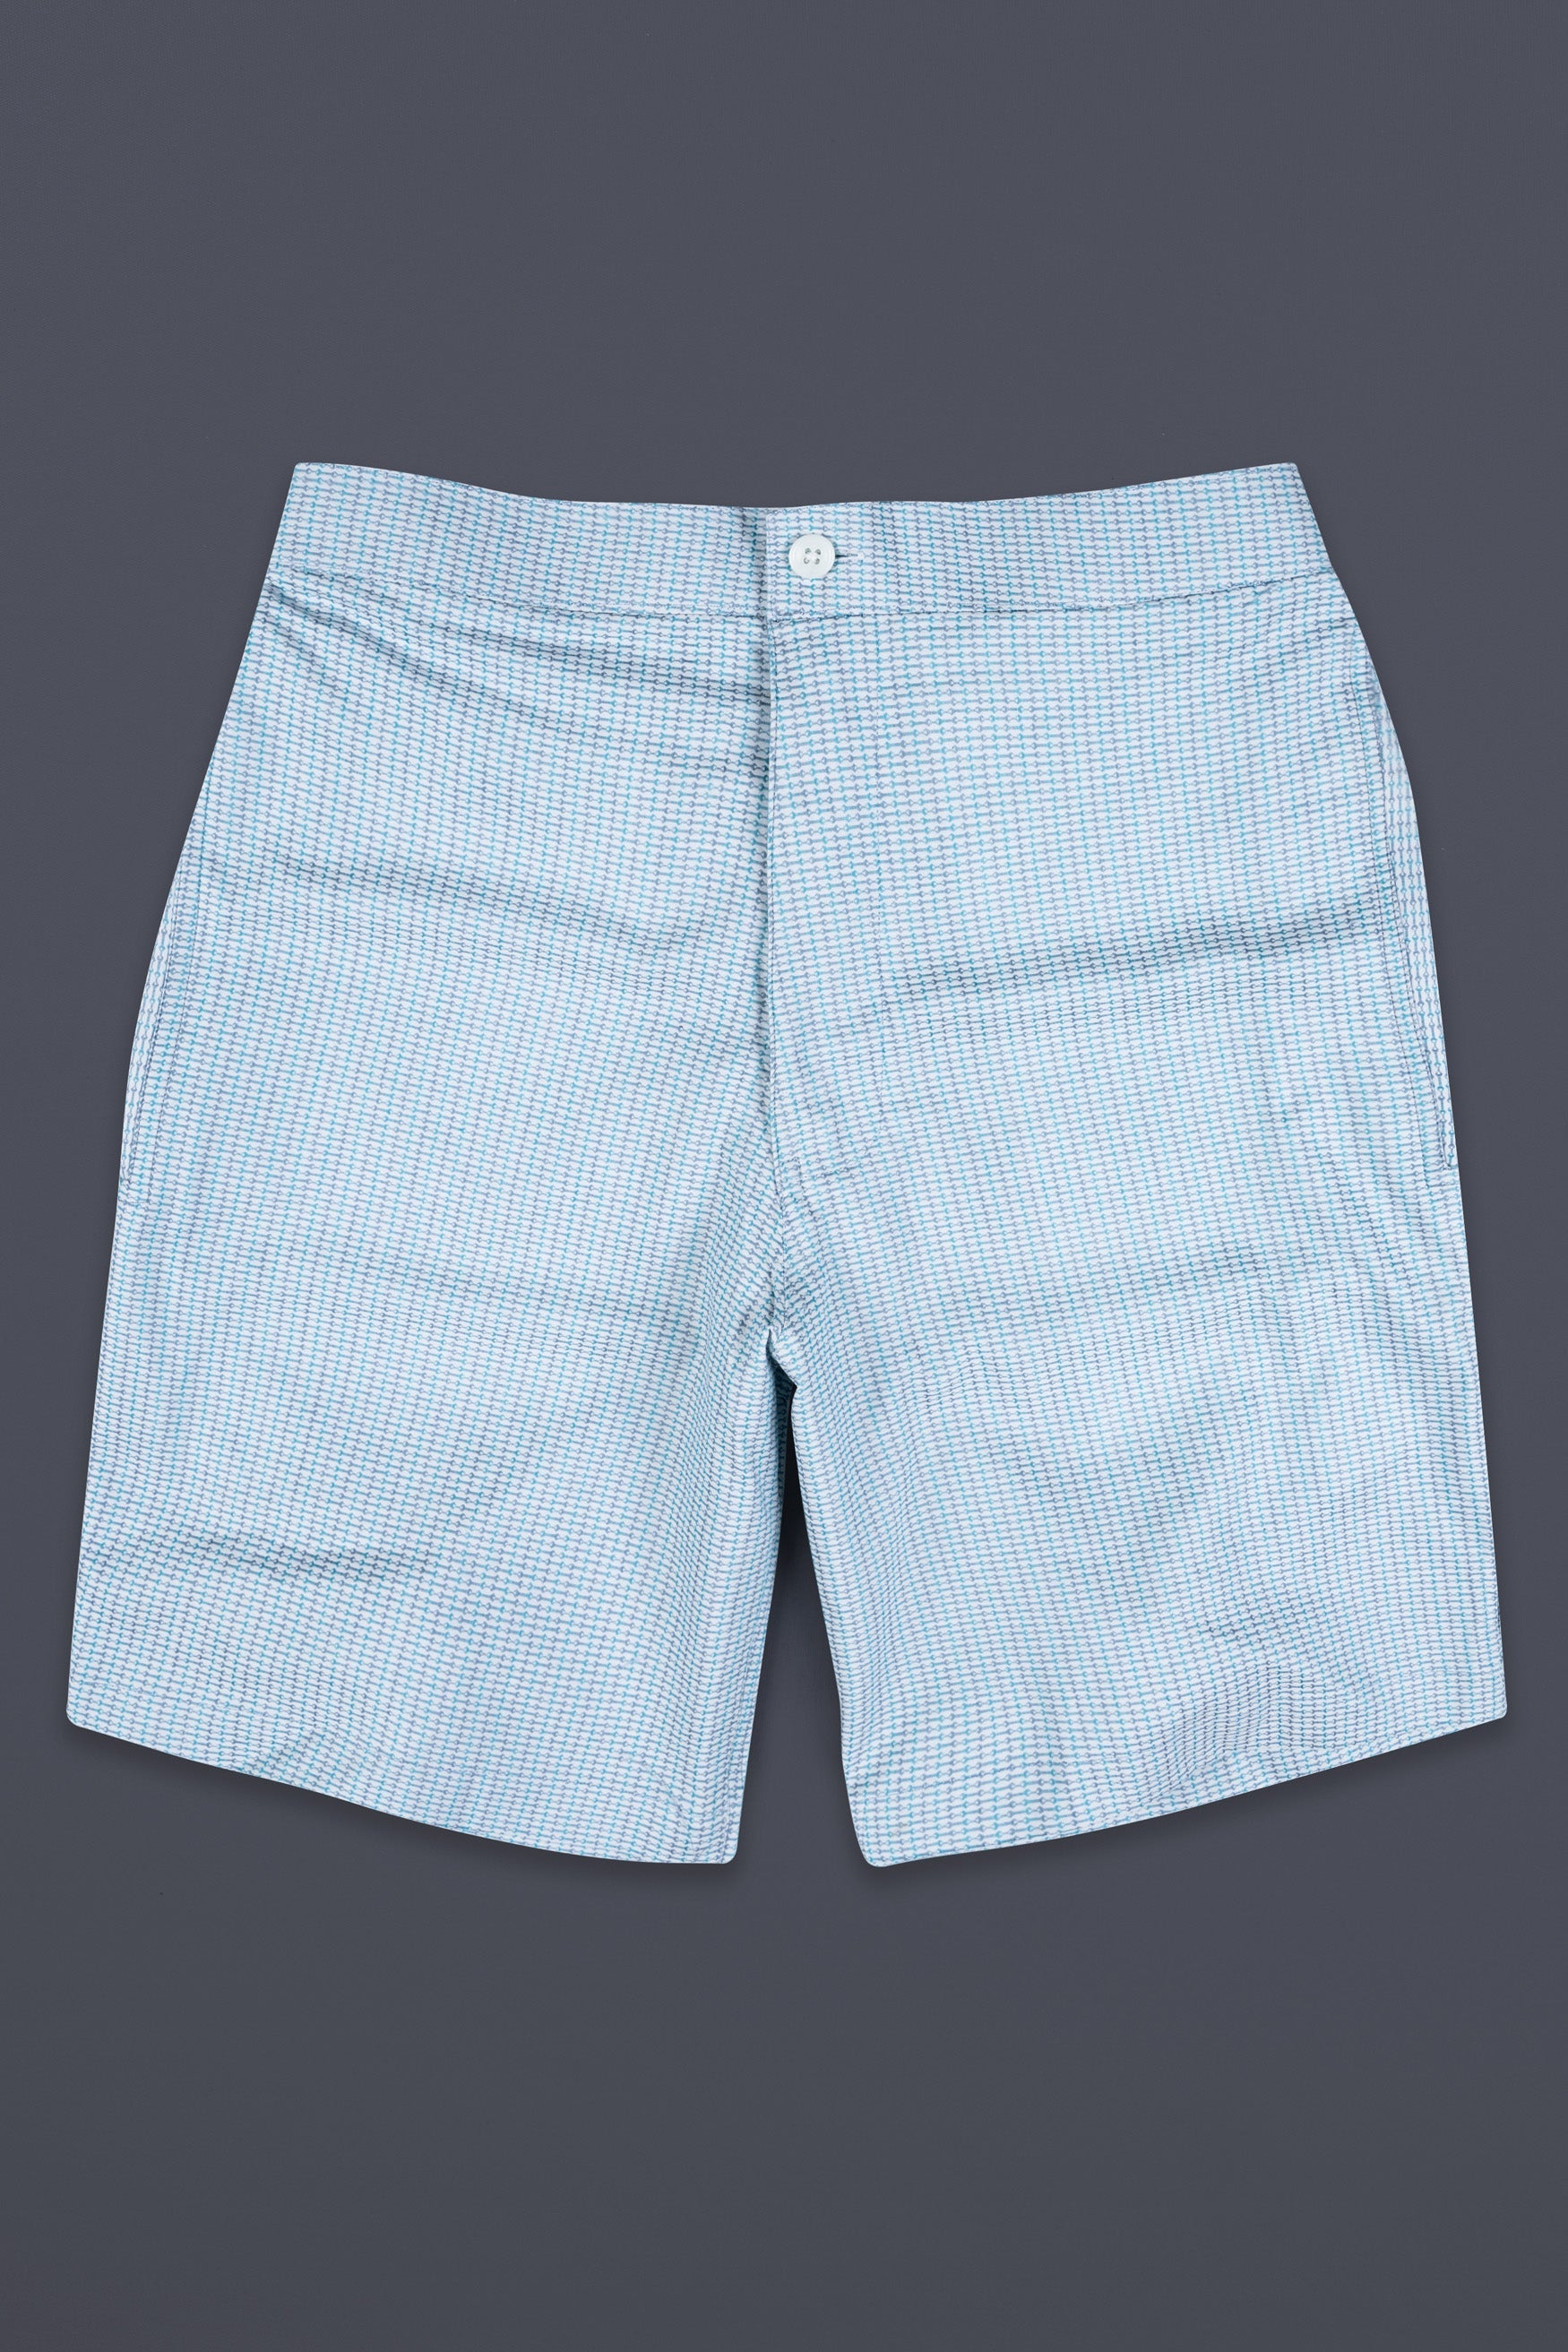 Hosta Blue and White Dobby Textured Giza Cotton Shorts SR388-28, SR388-30, SR388-32, SR388-34, SR388-36, SR388-38, SR388-40, SR388-42, SR388-44